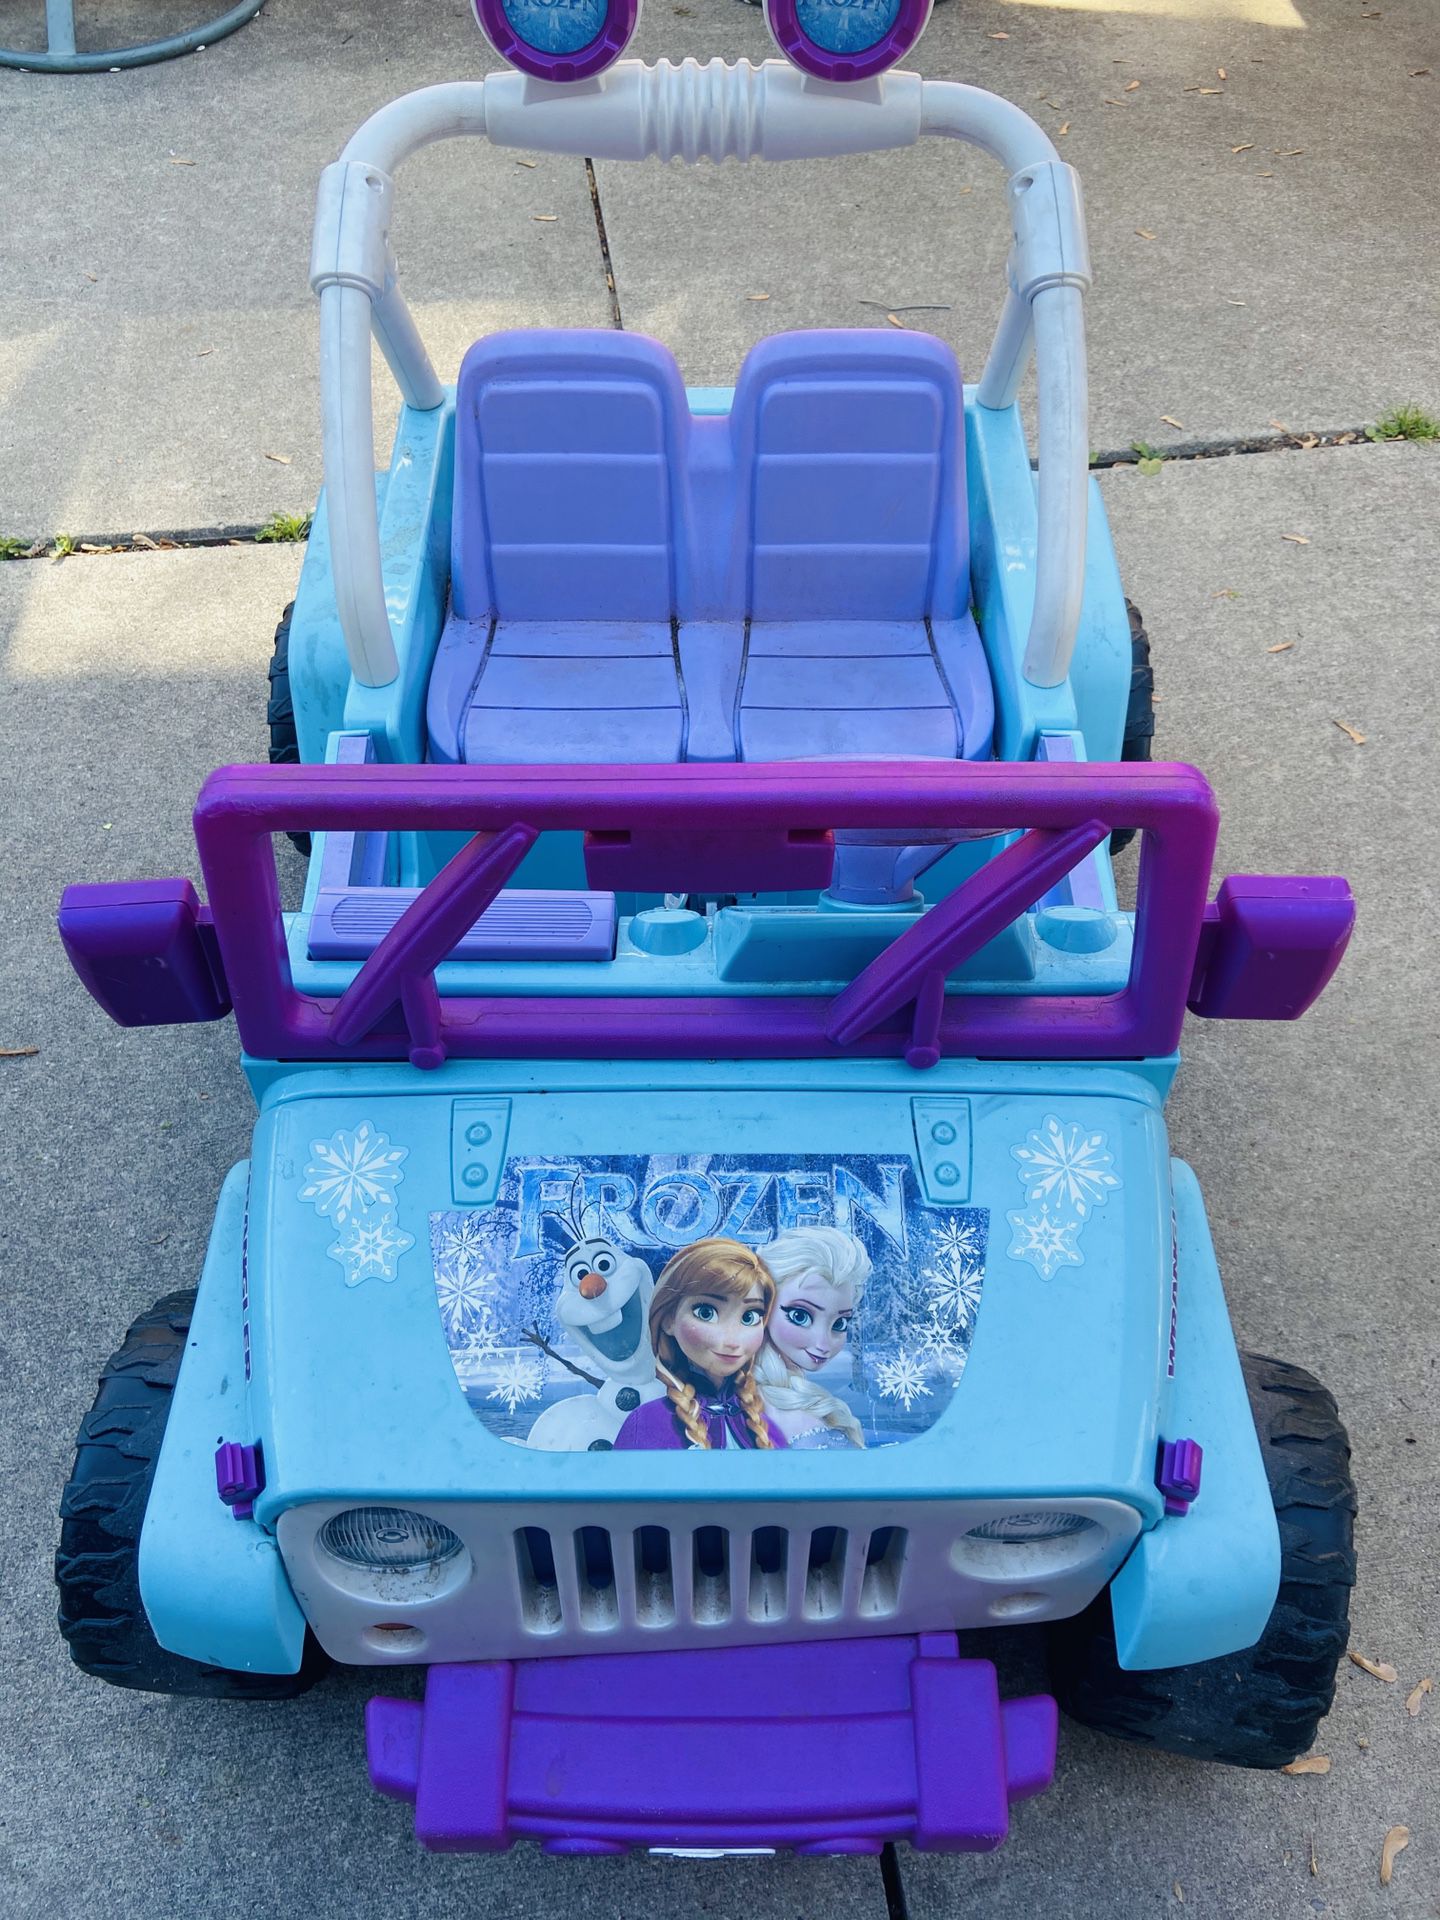 Disney Frozen Jeep Wrangler Ride on Car